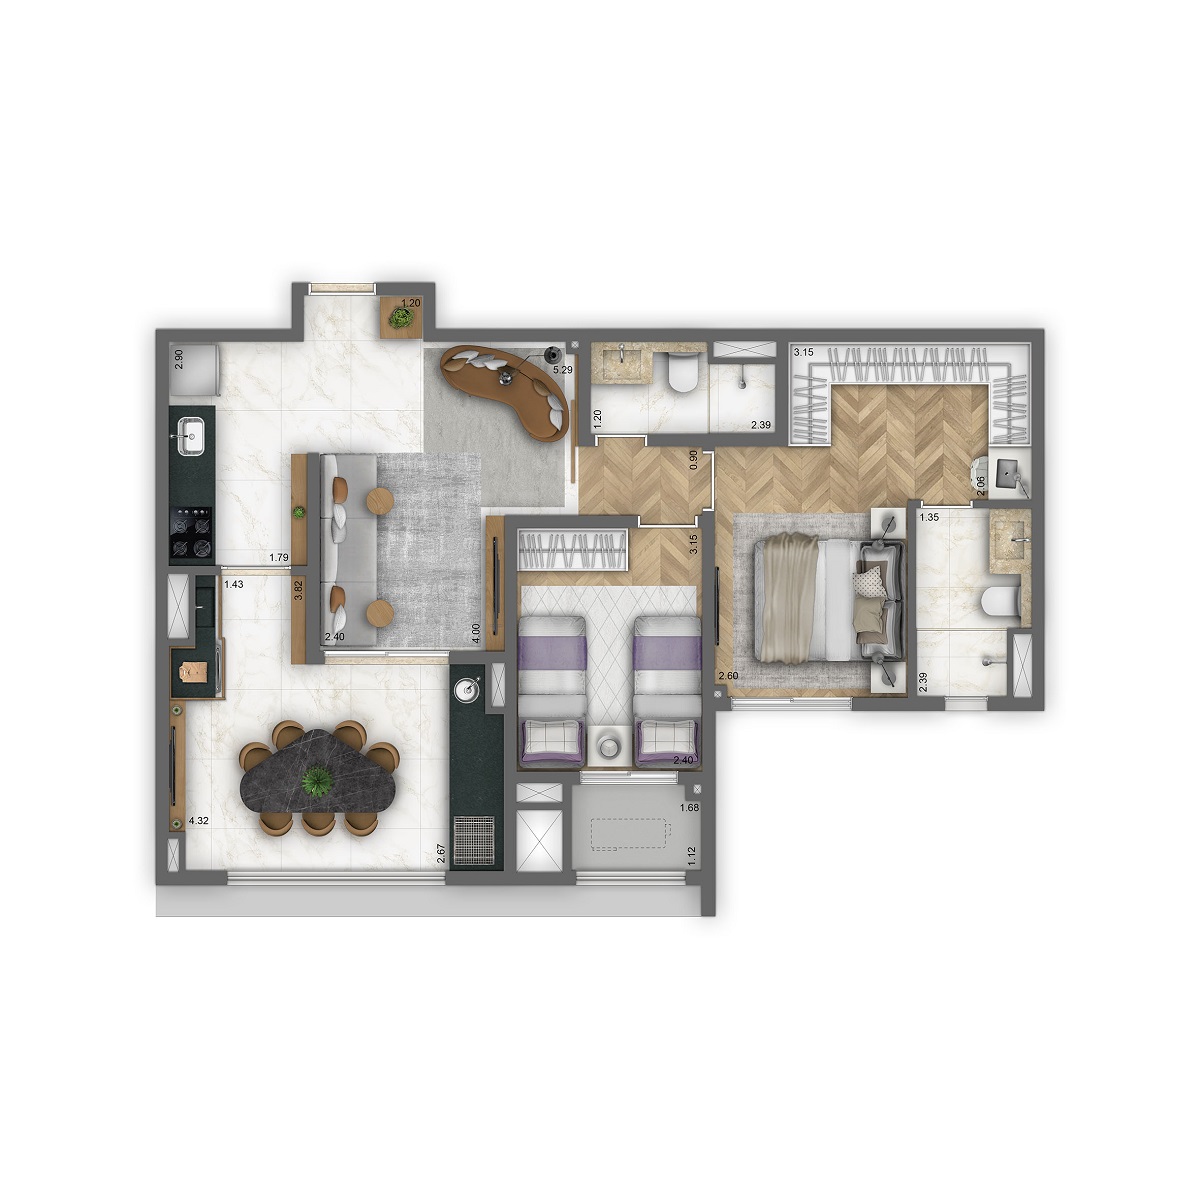 71 m² (2 dorms)